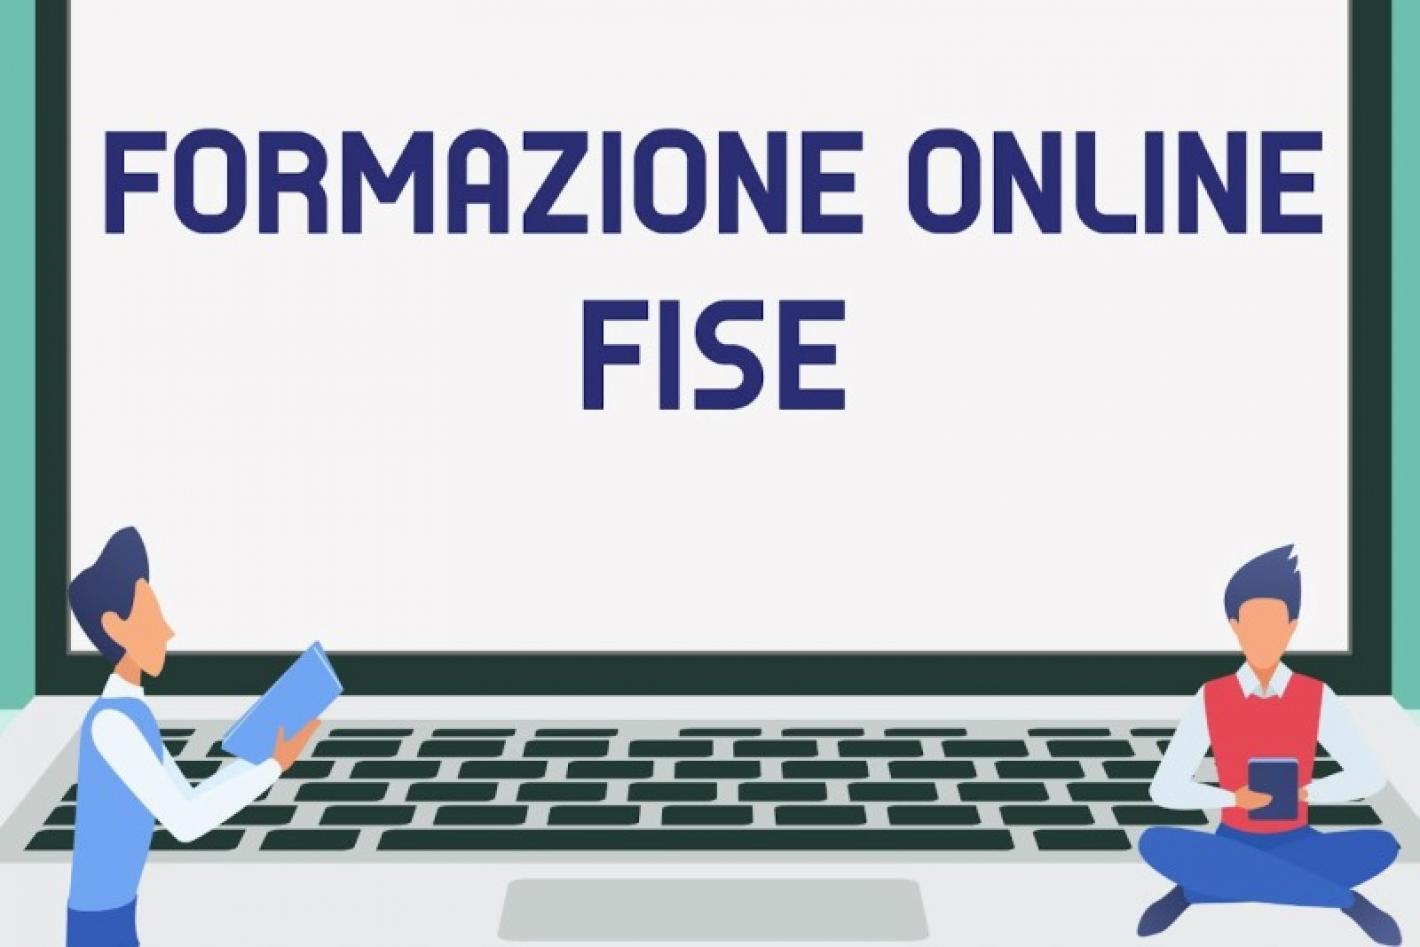 images/toscana/medium/Formazione_online_Fise.jpg